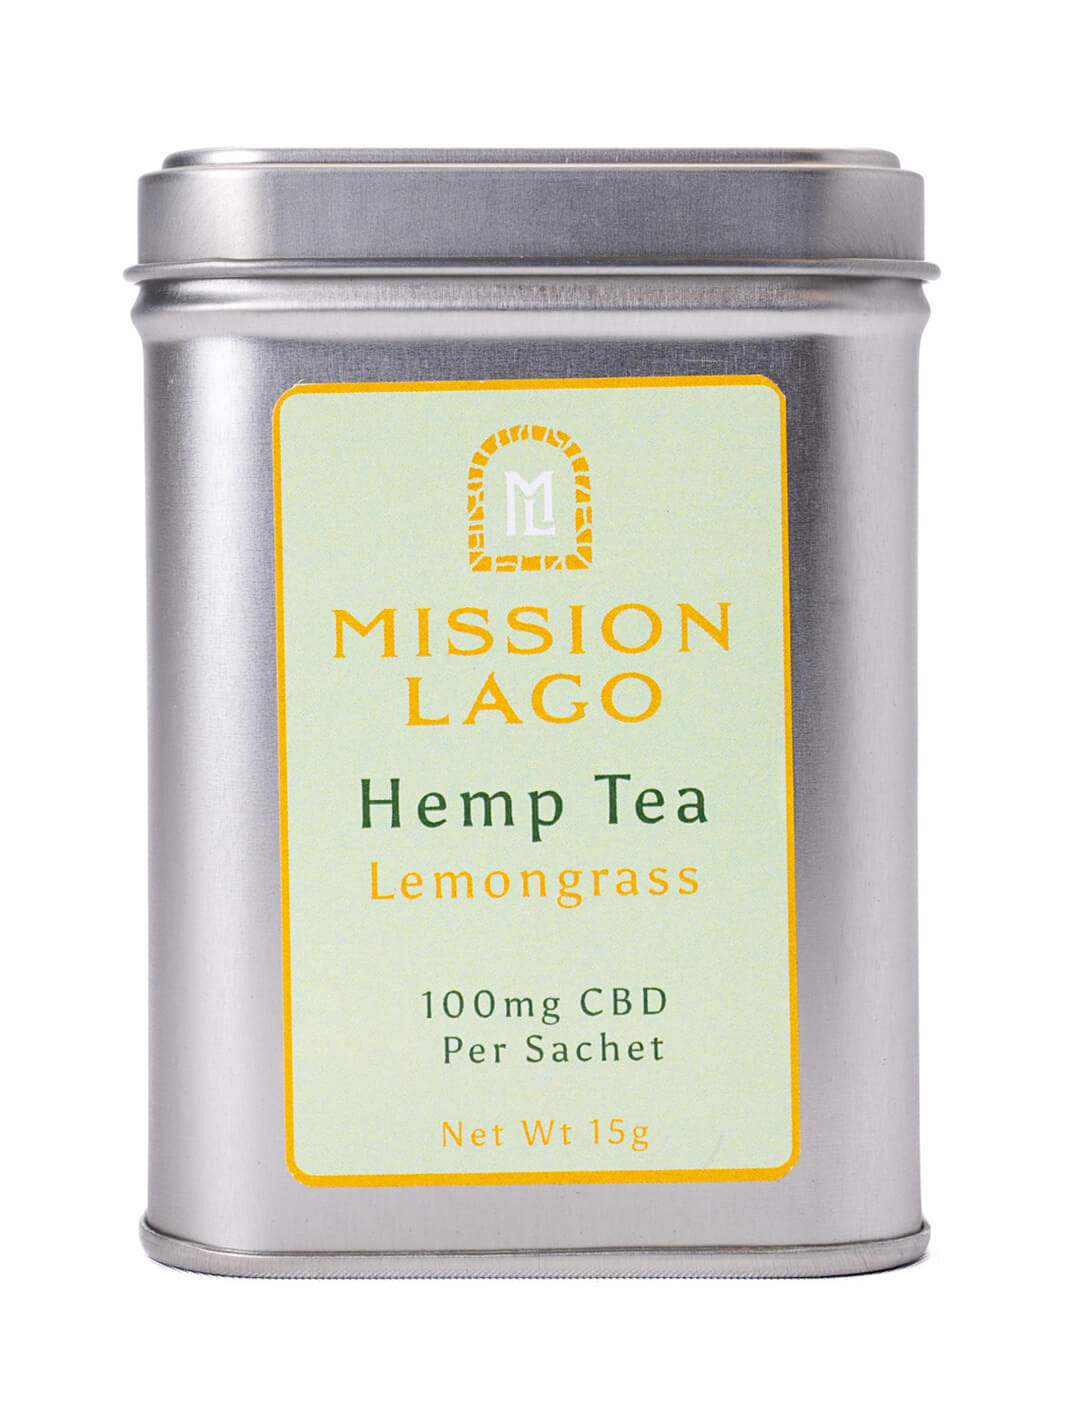 Lemongrass Hemp Tea - Mission Lago Farms